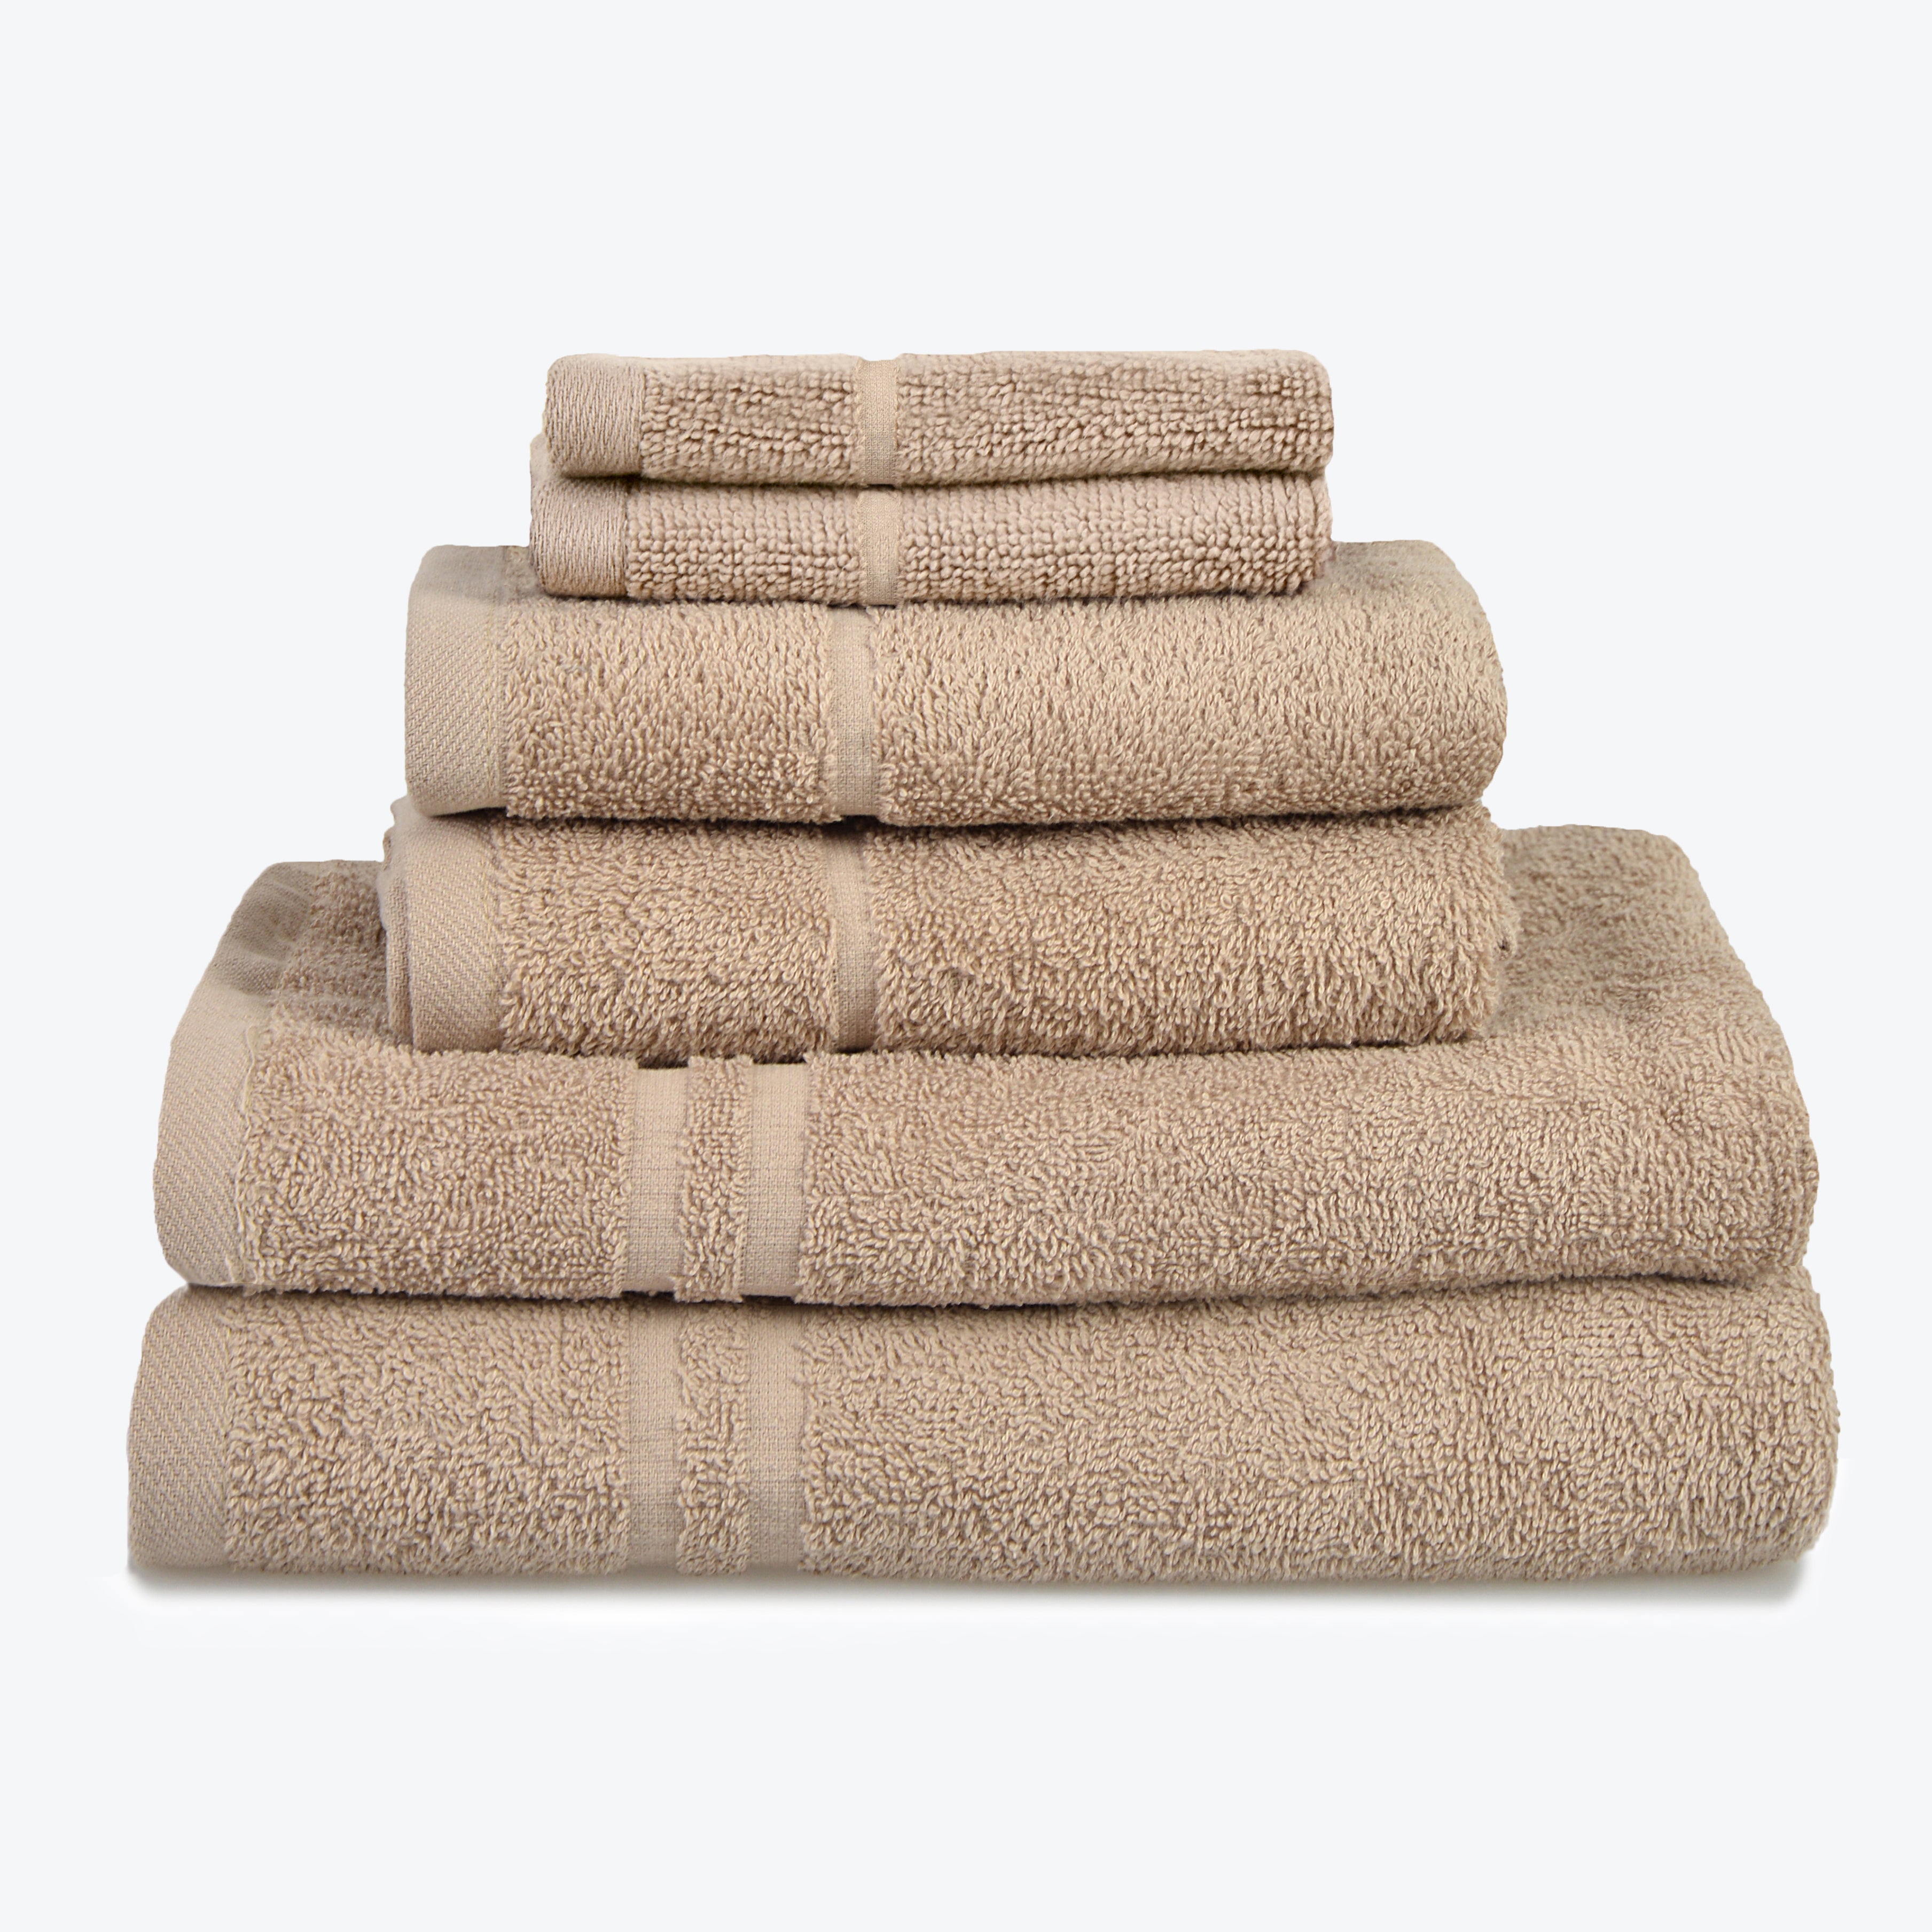 Hotel Quality Towel Bale - Stone Beige 6pc Towel Set